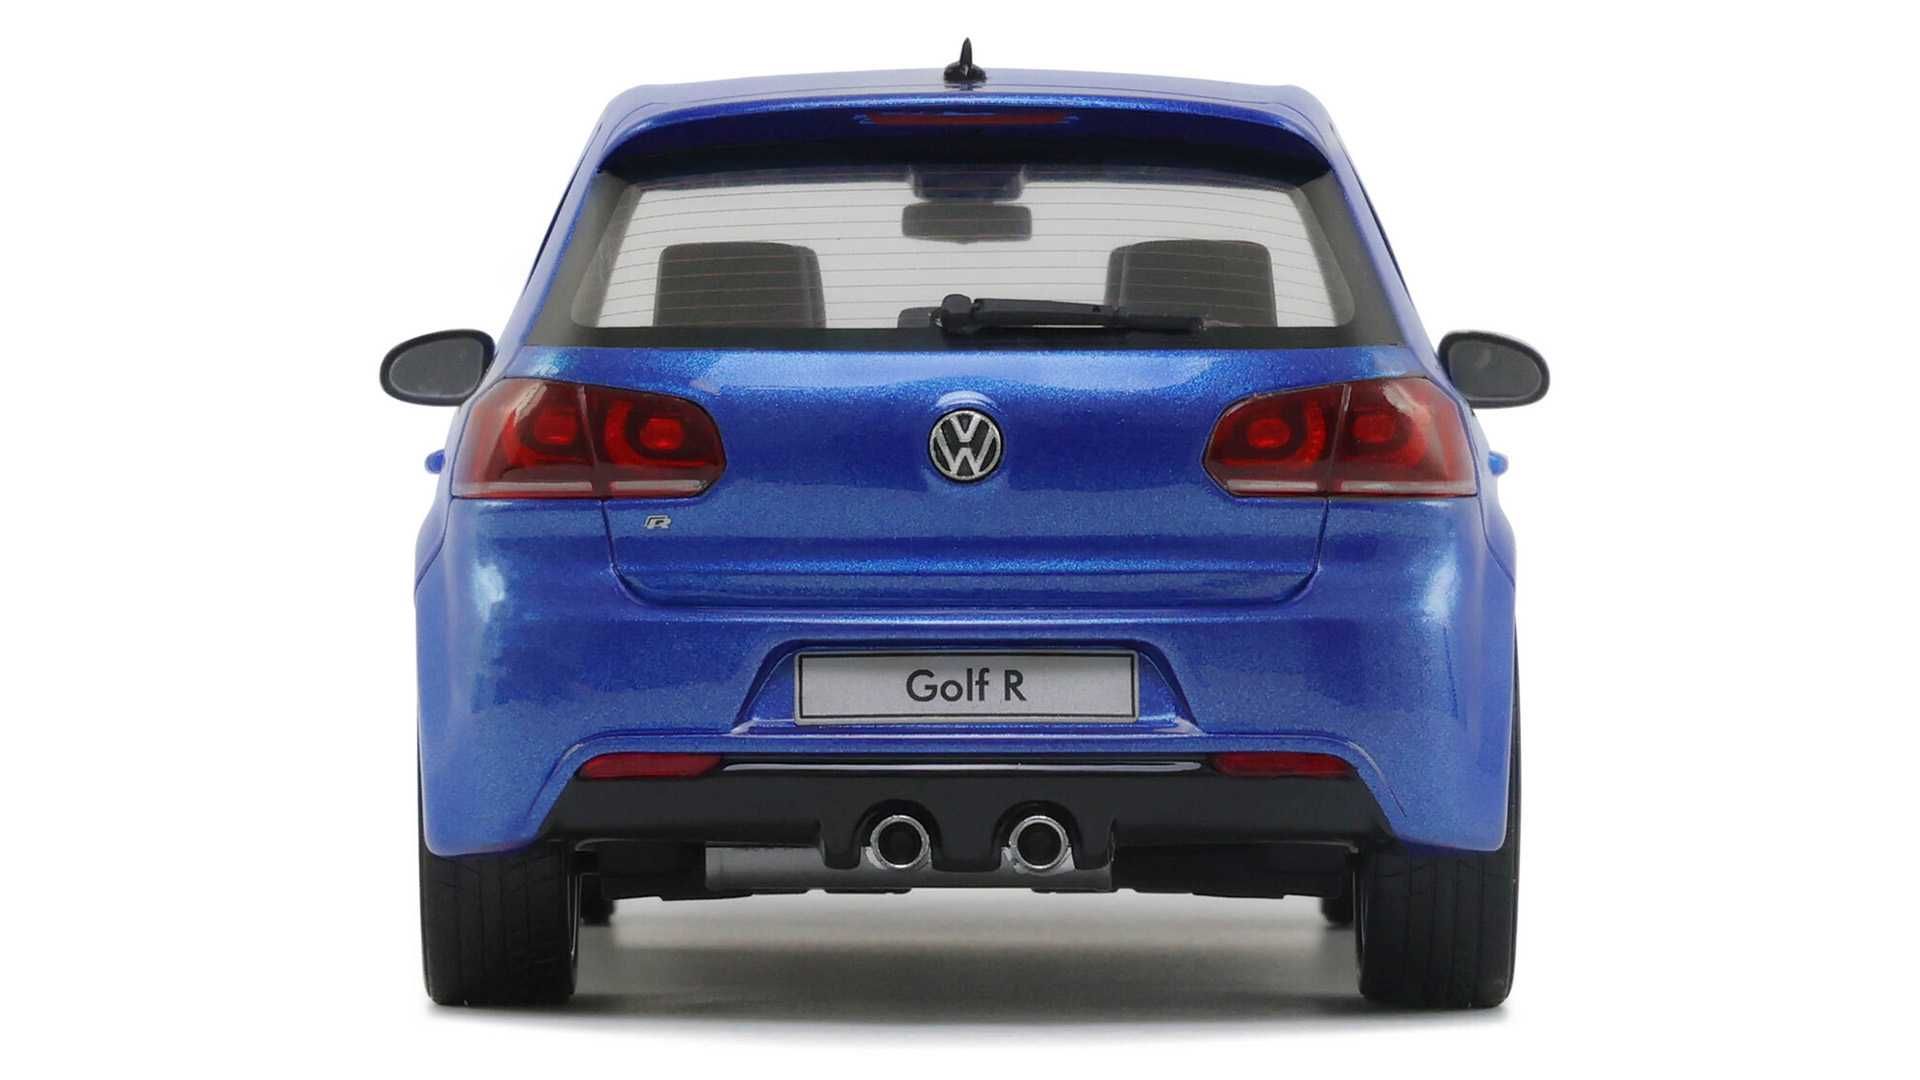 1:18 Otto Volkswagen VW Golf 6 R 2010 blue model